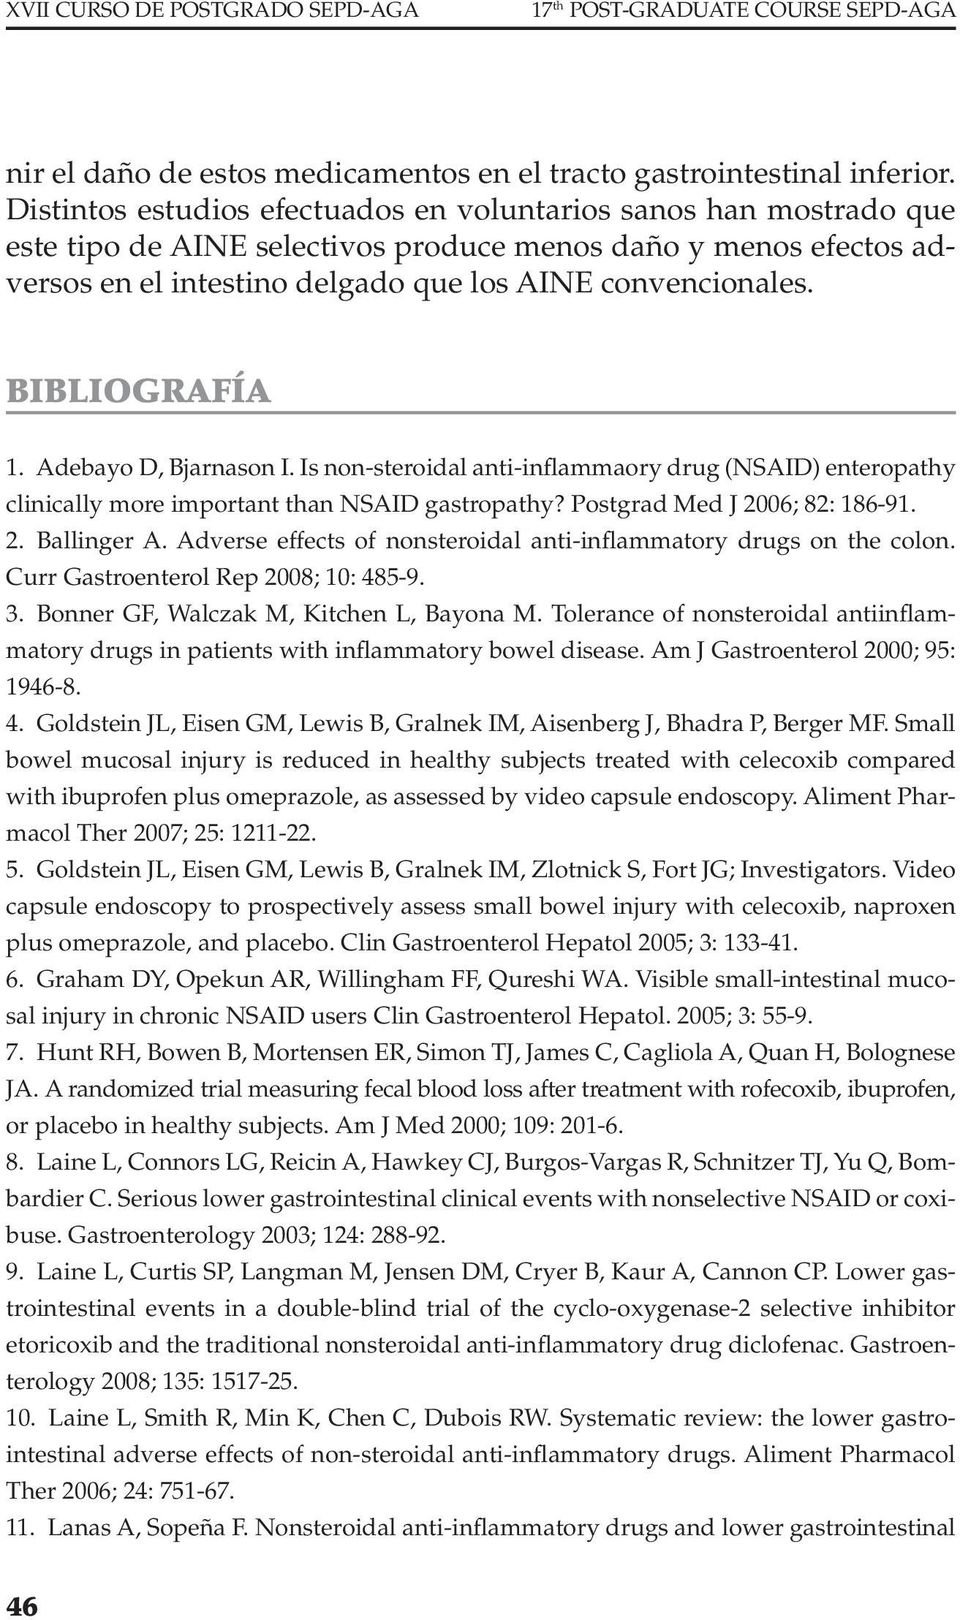 BIBLIOGRAFÍA 1. Adebayo D, Bjarnason I. Is non-steroidal anti-inflammaory drug (NSAID) enteropathy clinically more important than NSAID gastropathy? Postgrad Med J 2006; 82: 186-91. 2. Ballinger A.